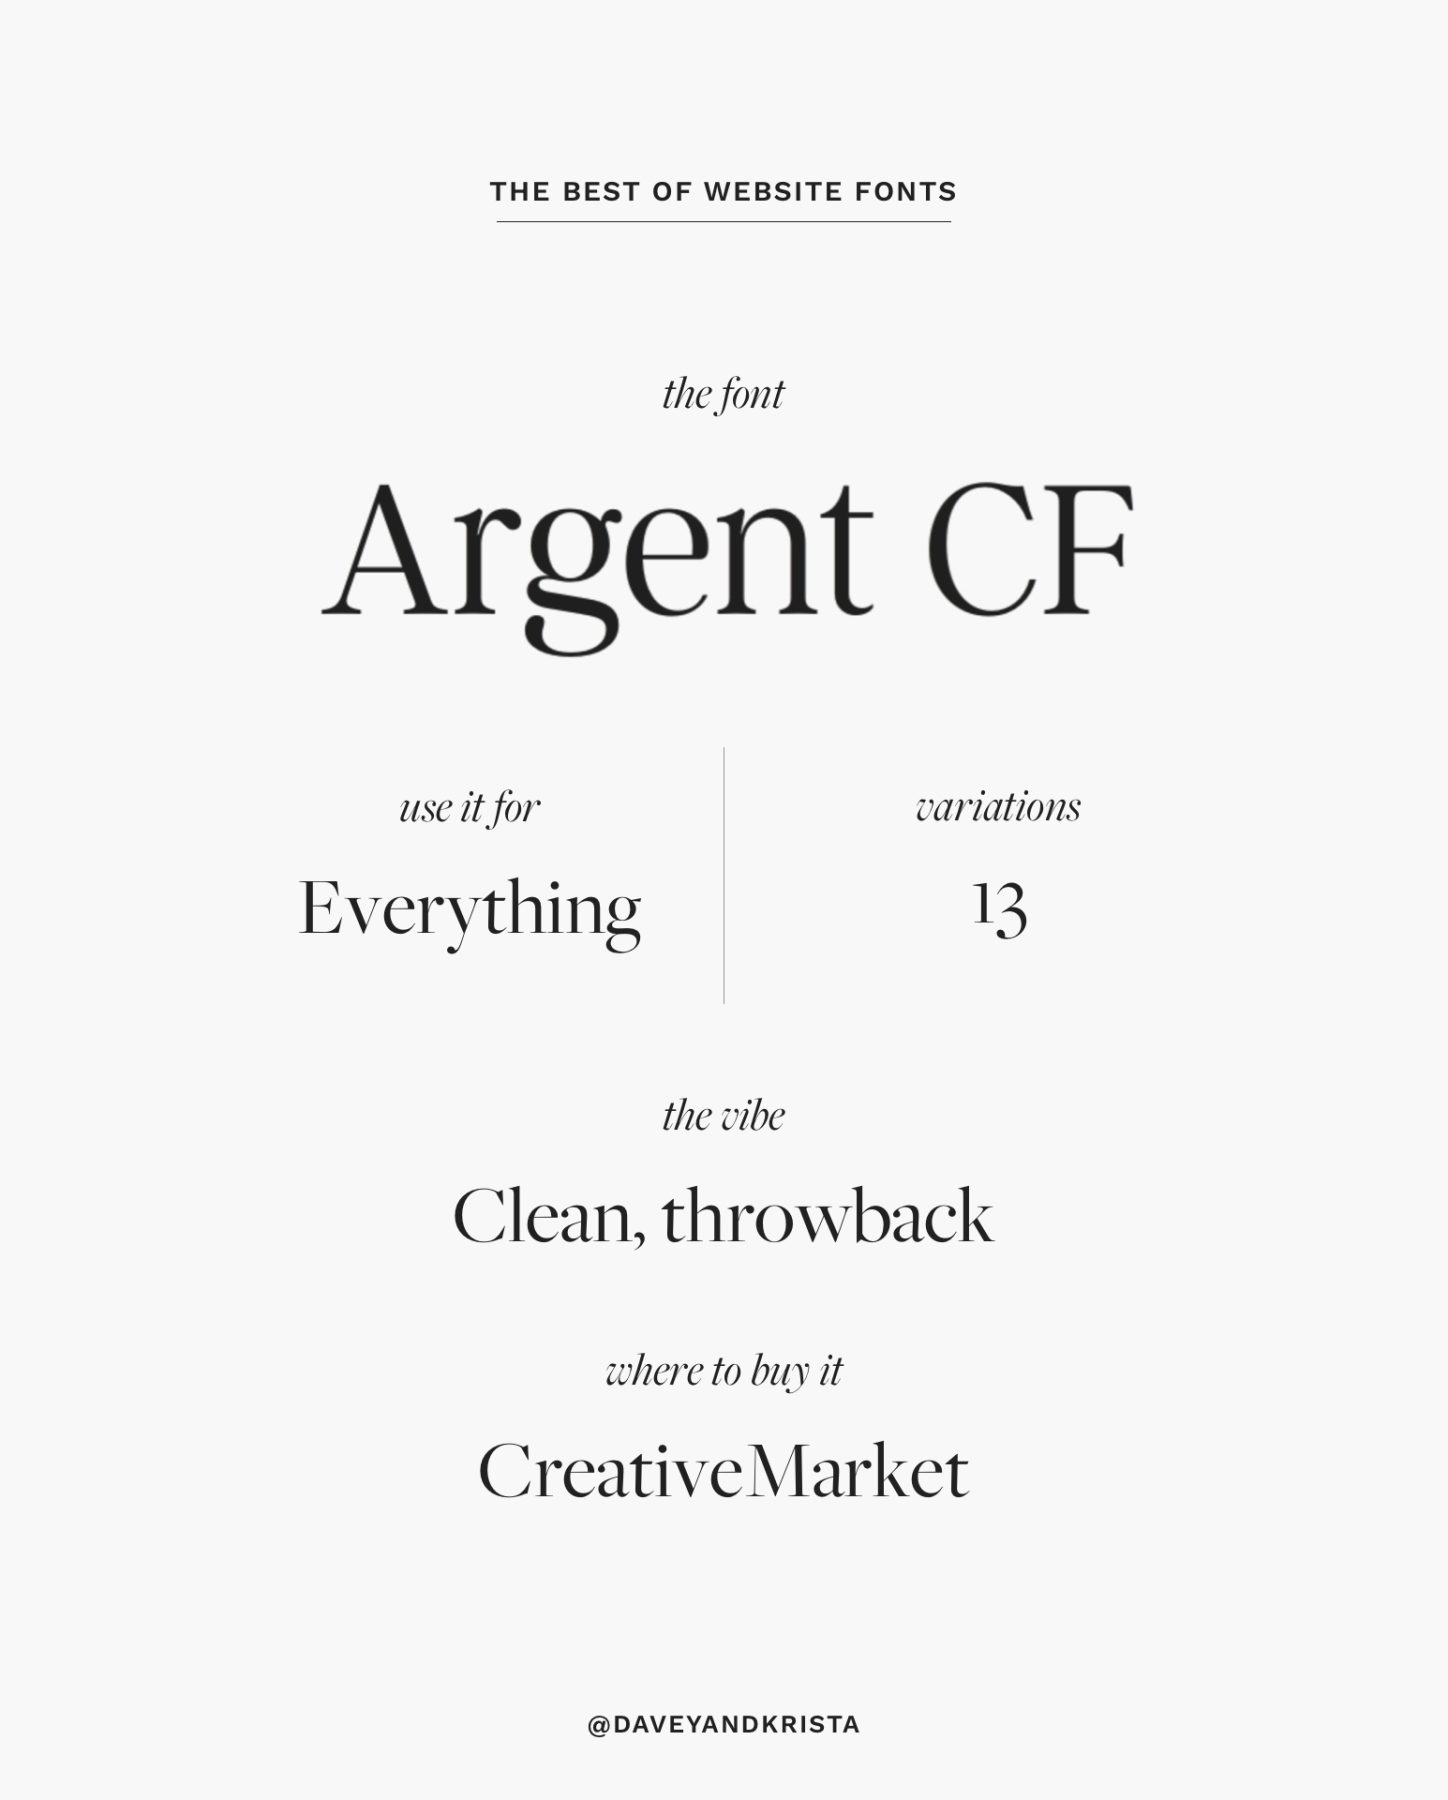 Argent - a clean, throwback-inspired serif font for websites | The Best Fonts for Websites